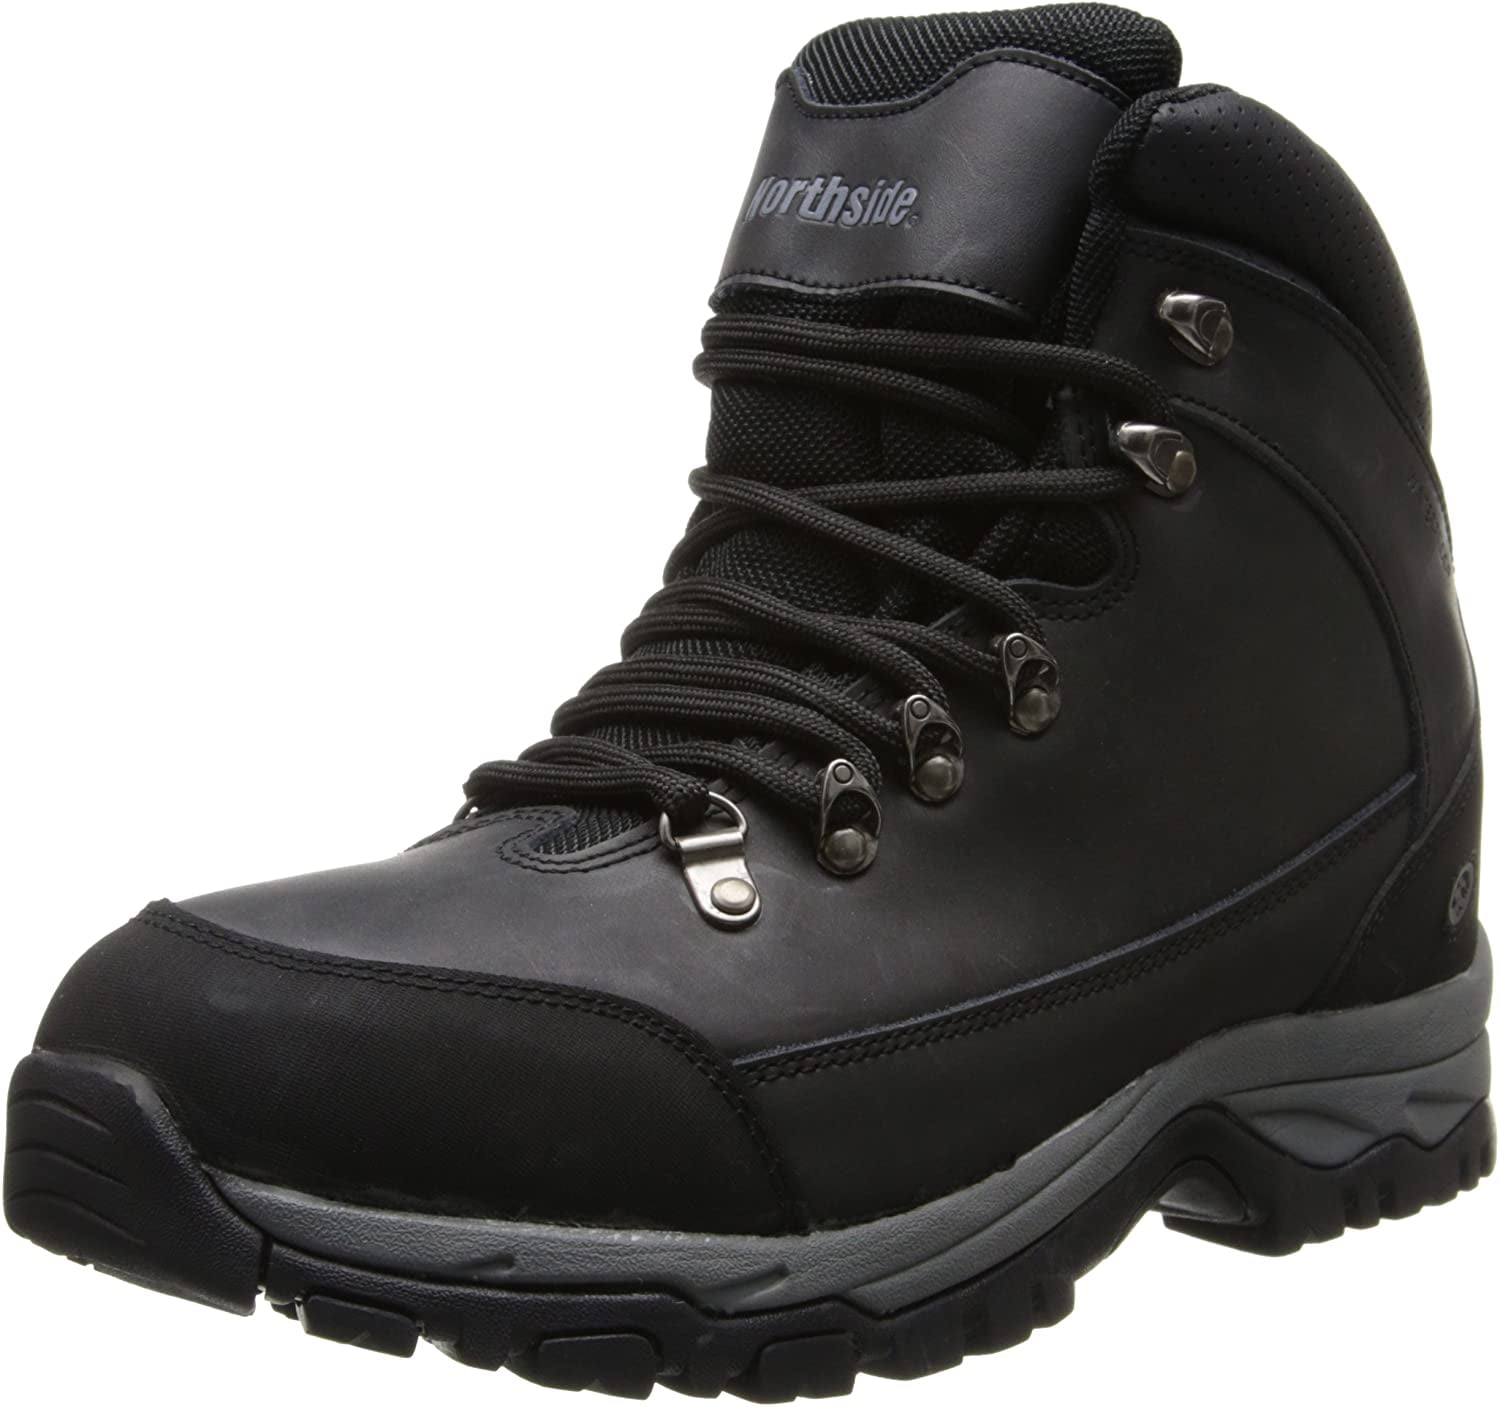 waterproof hiking boots black